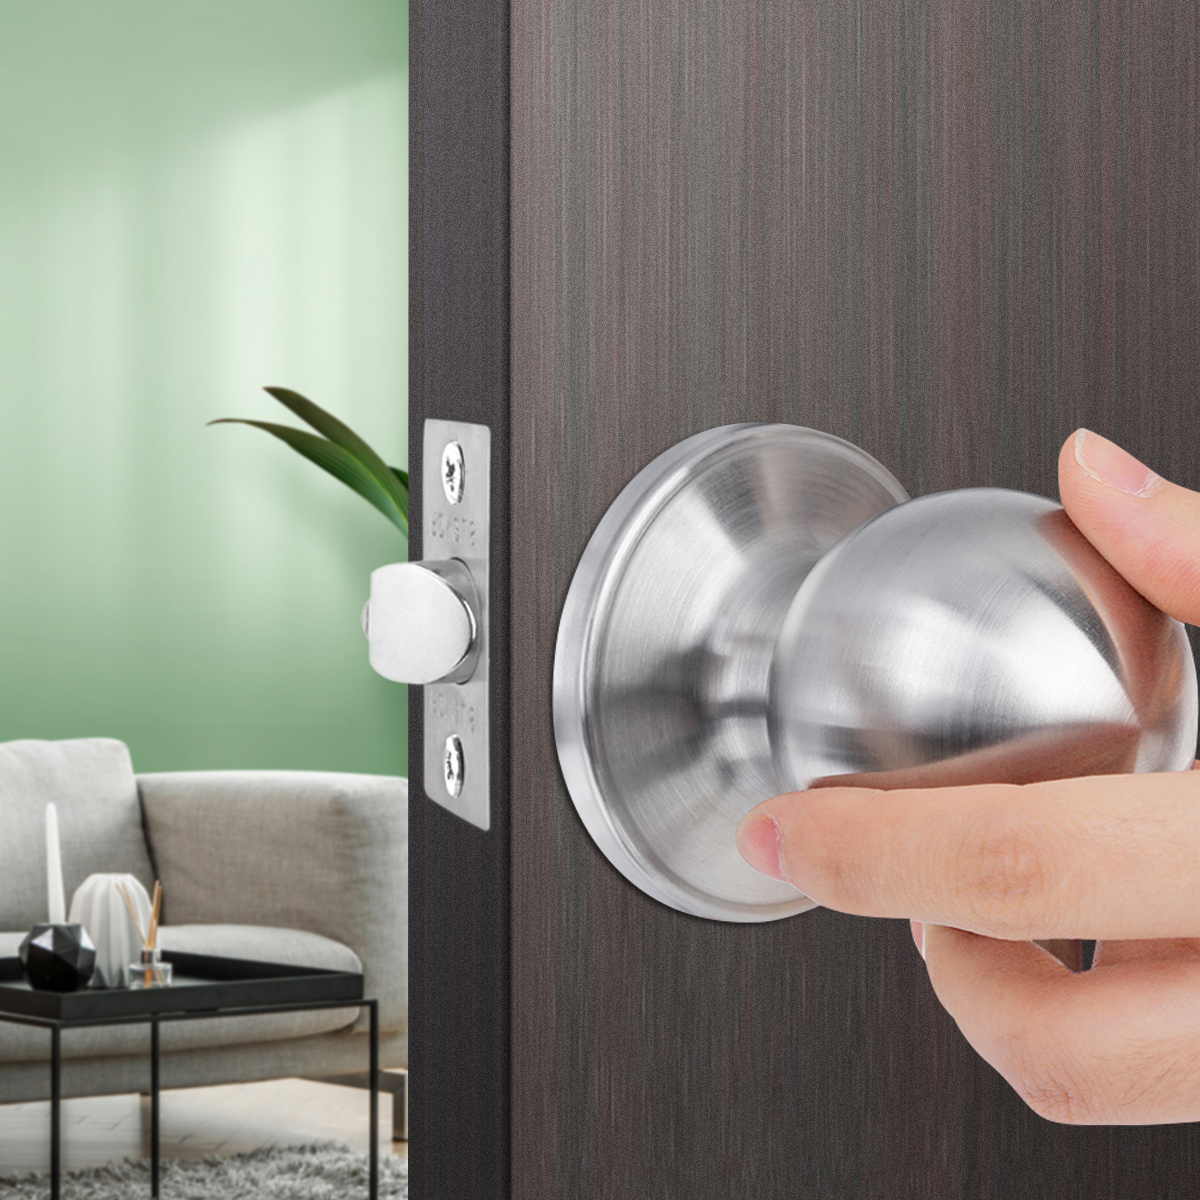 Stainless-Steel-Bathroom-Round-Ball-Door-Knob-Set-Handle-Passage-Lock-With-Key-1029757-2